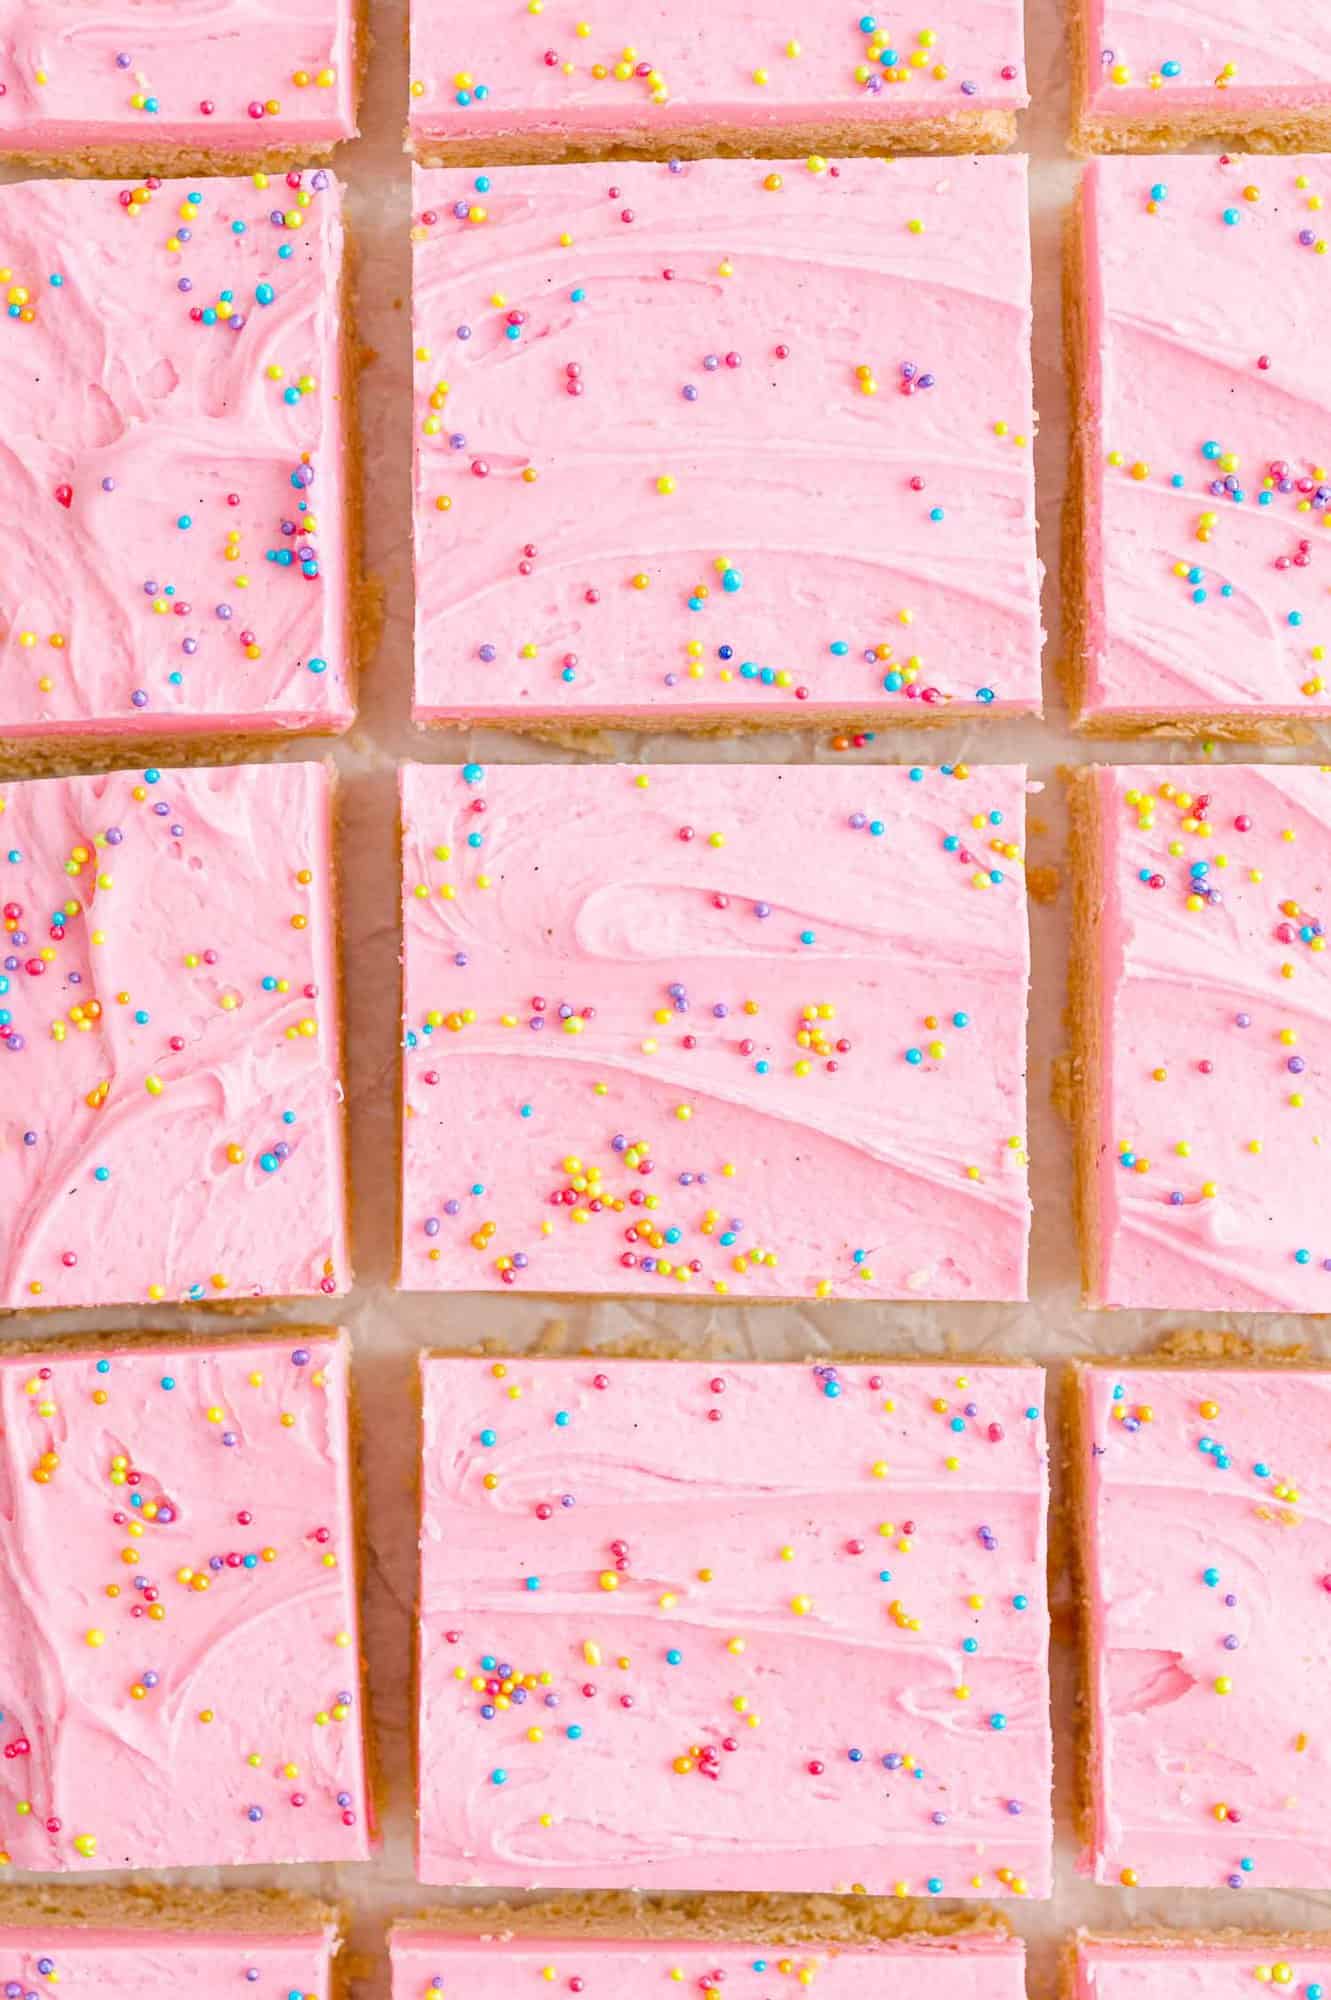 Barres à biscuits avec glaçage rose, vues du dessus.